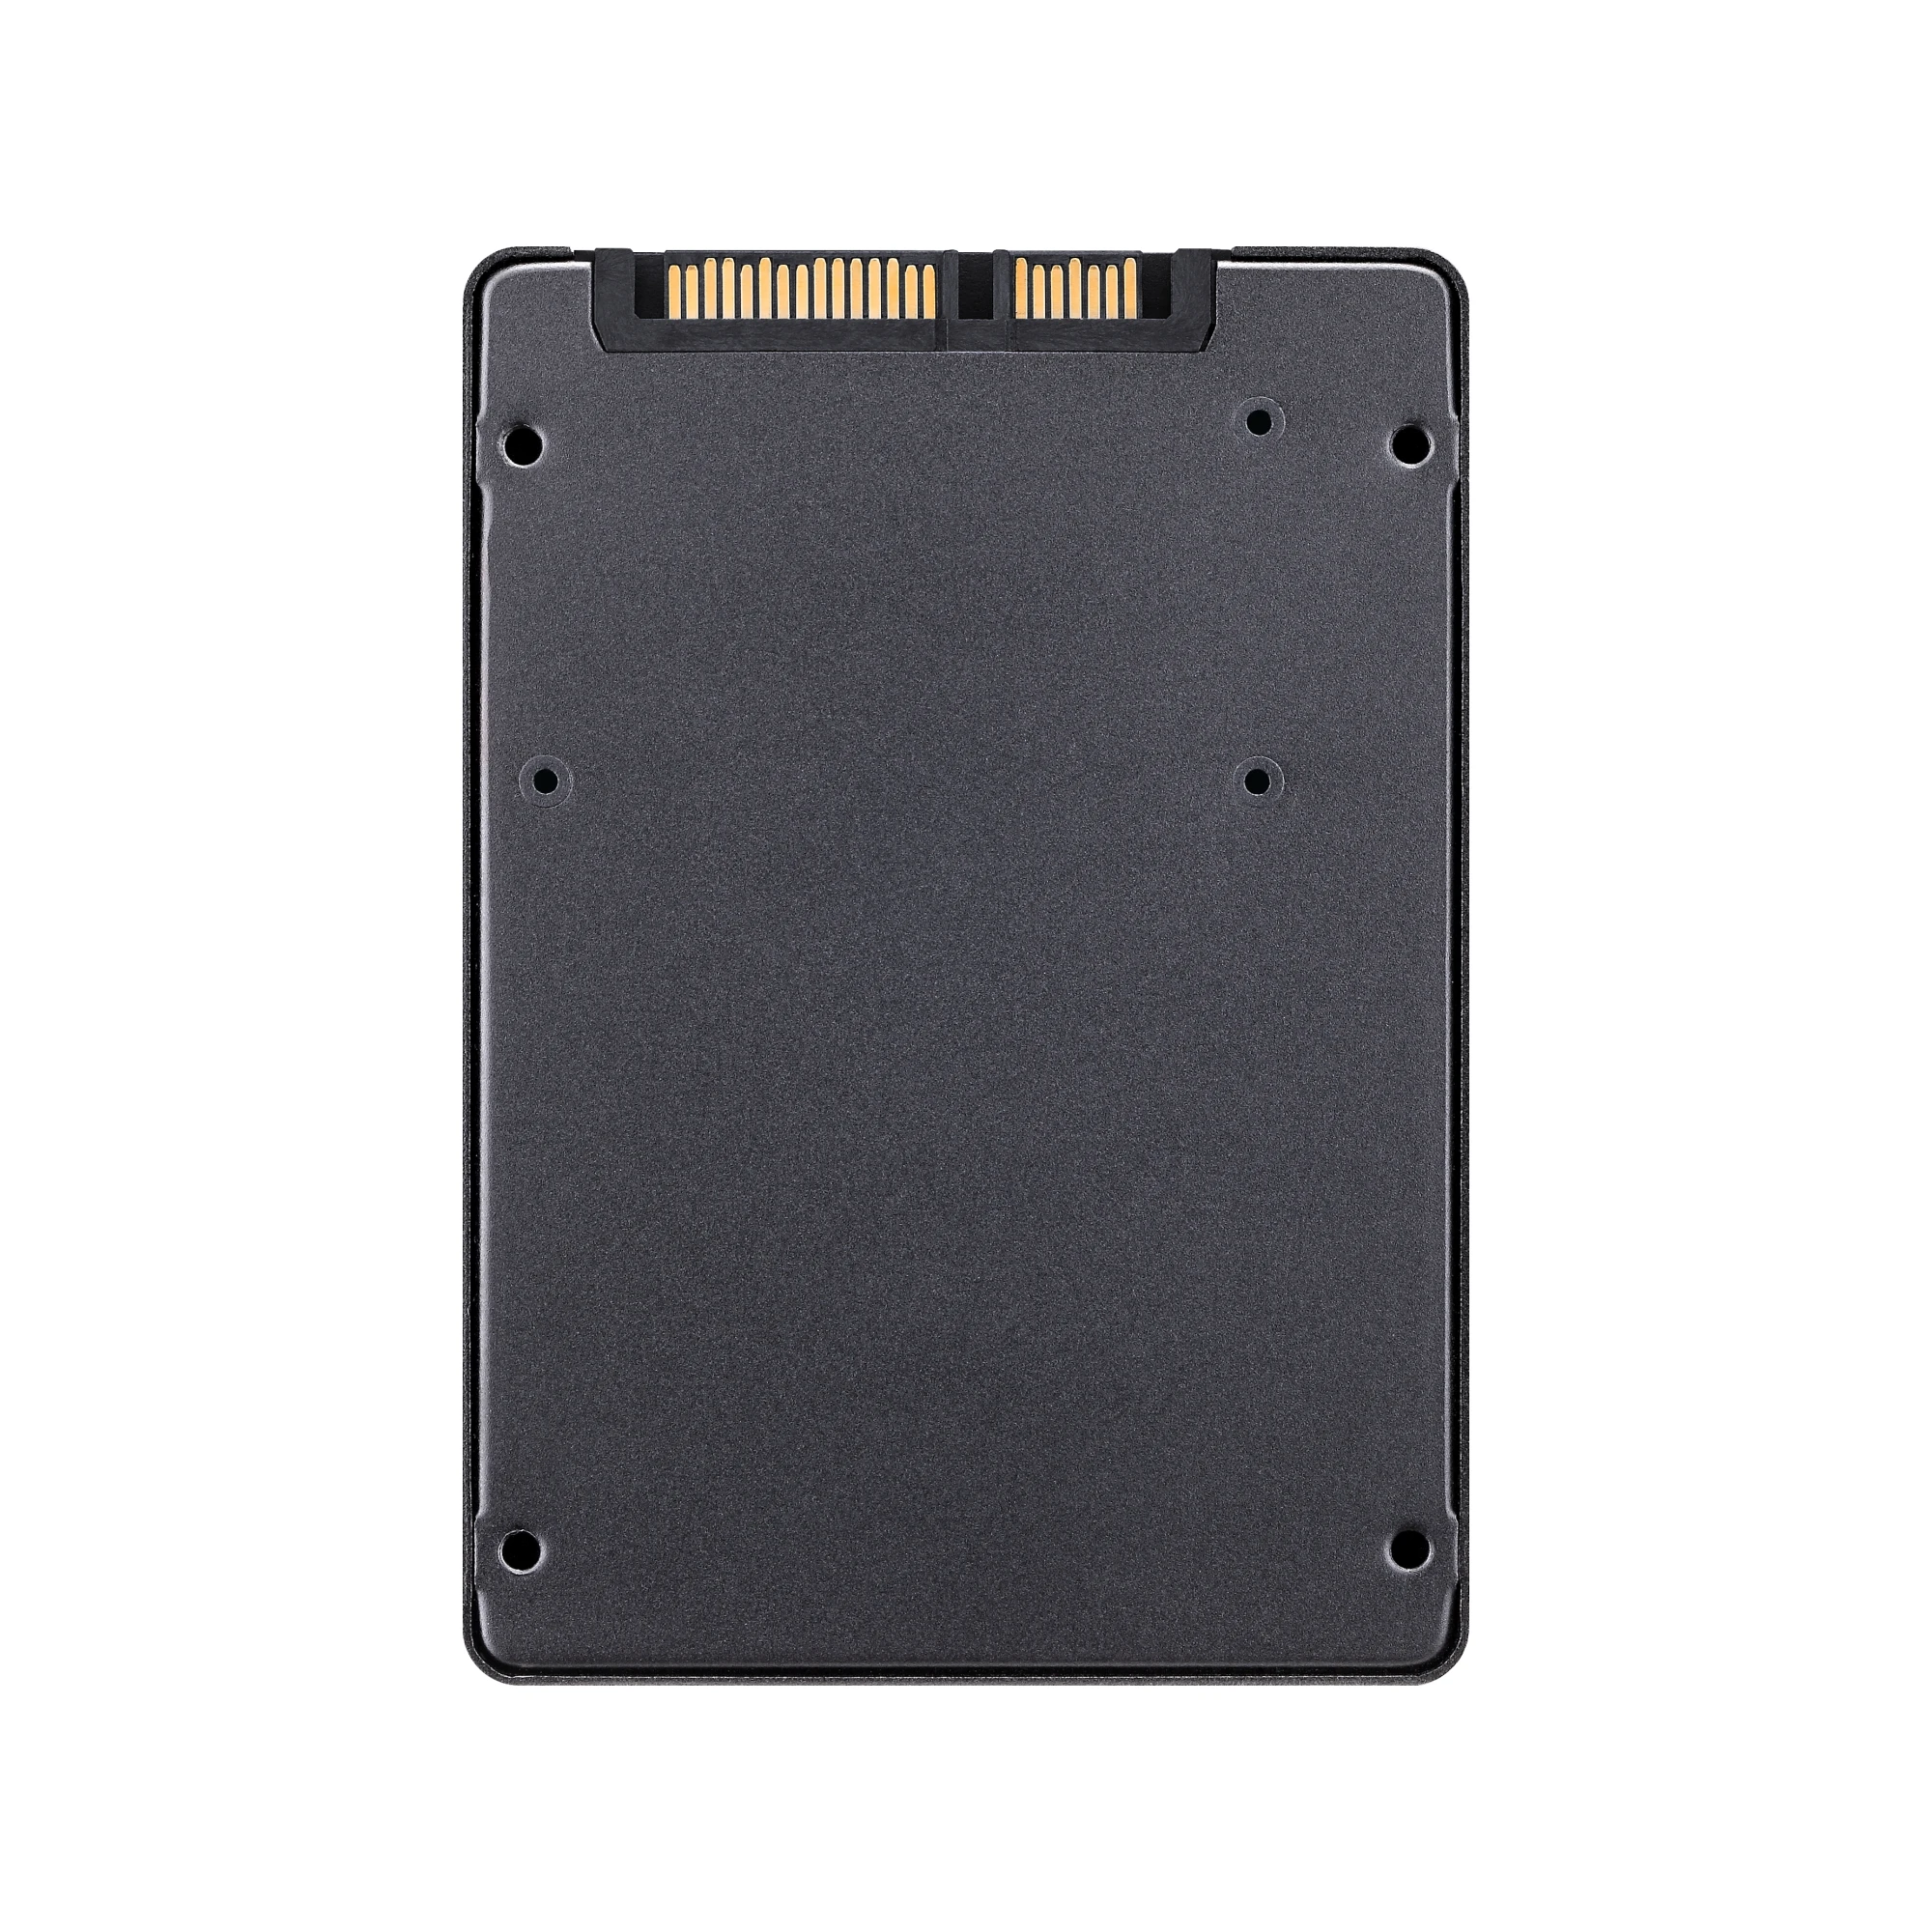 Sunic original 2.5 inch SATAIII ssd 1tb external hard disk ssd 960gb